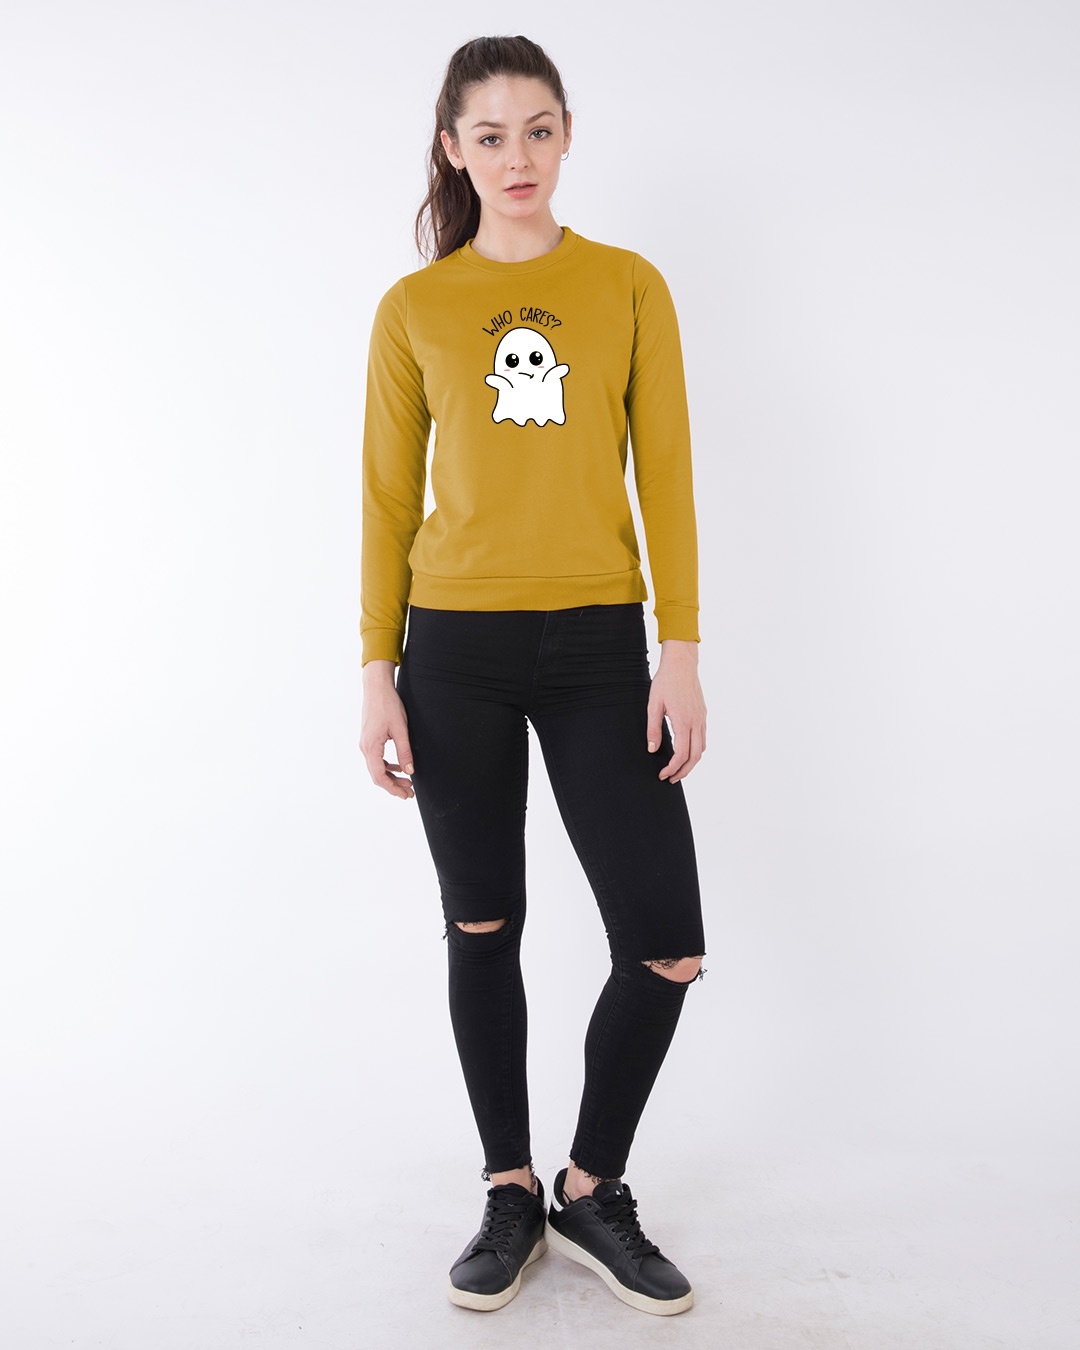 Shop Boo Cares Fleece Light Sweatshirt-Design